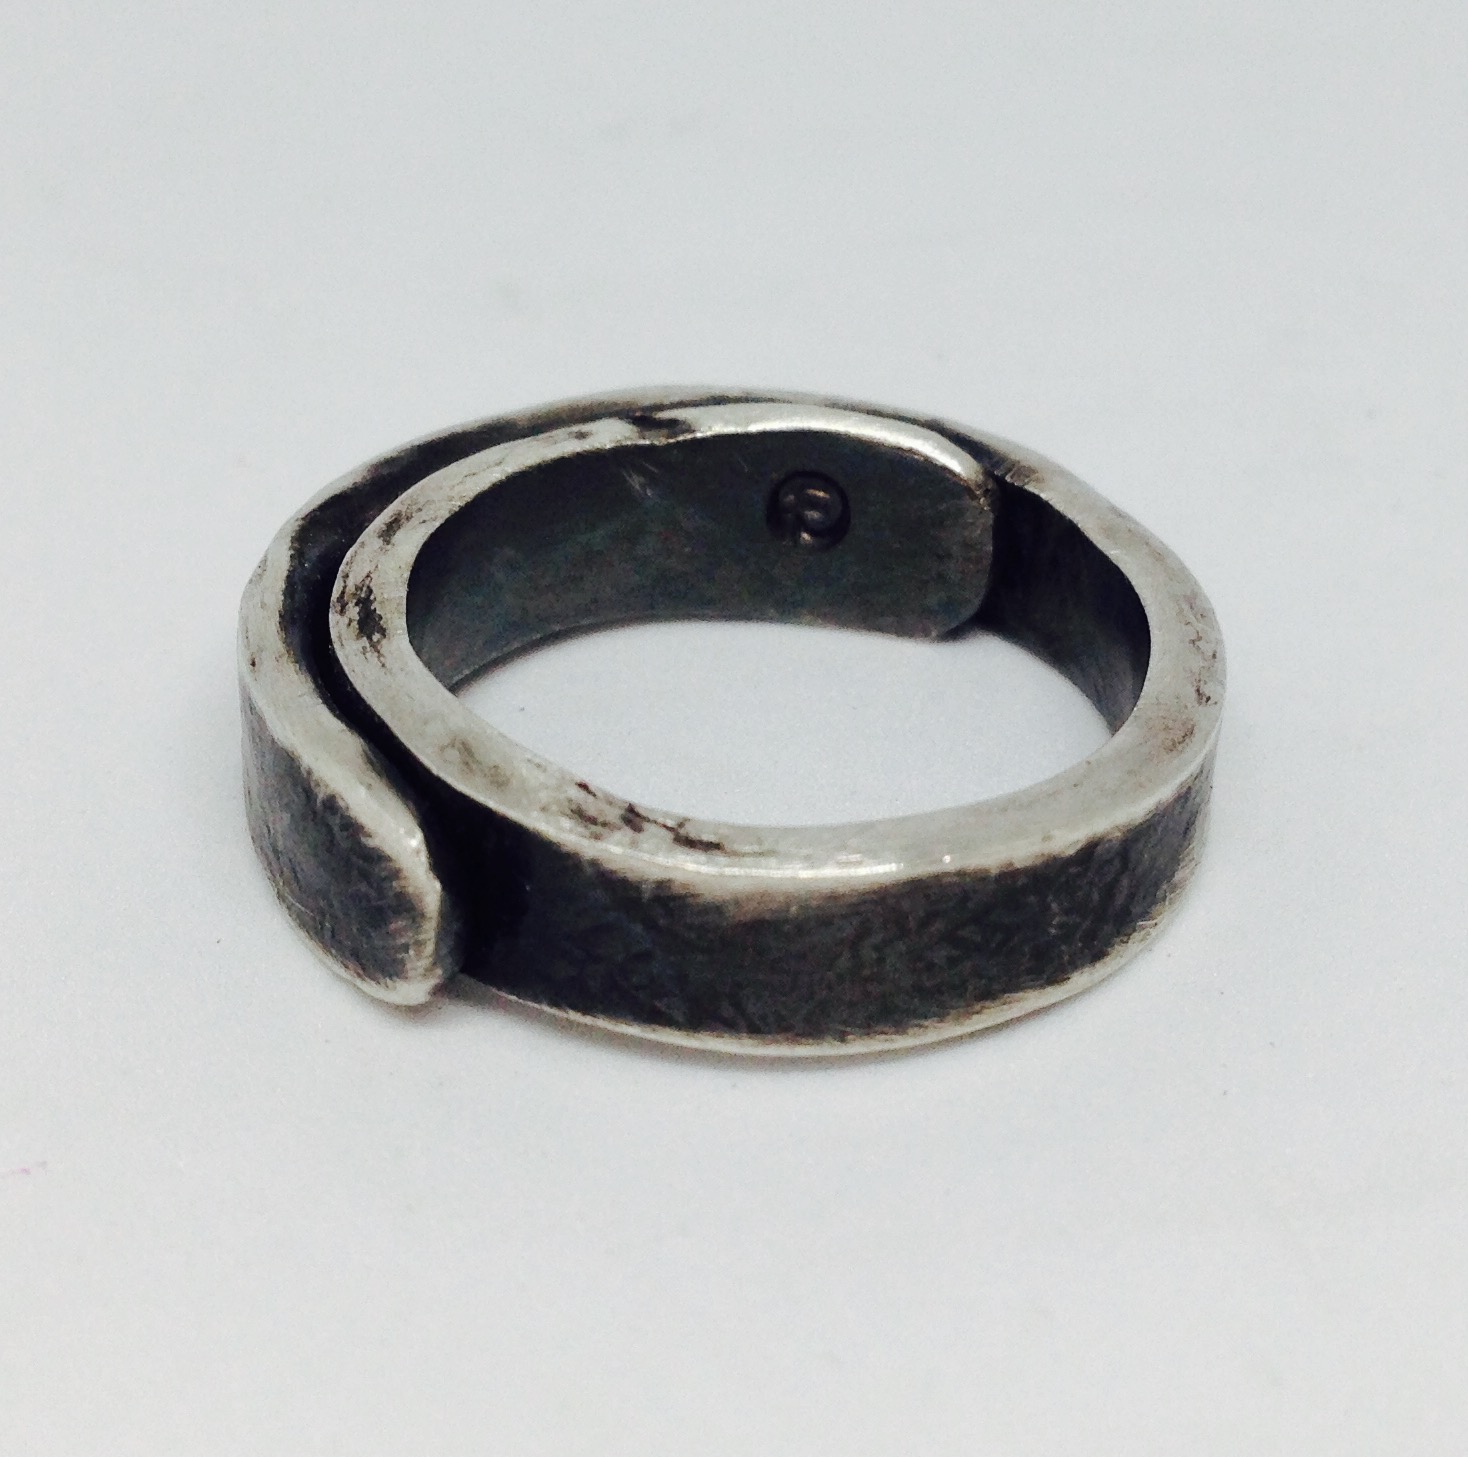 Thin silver ring